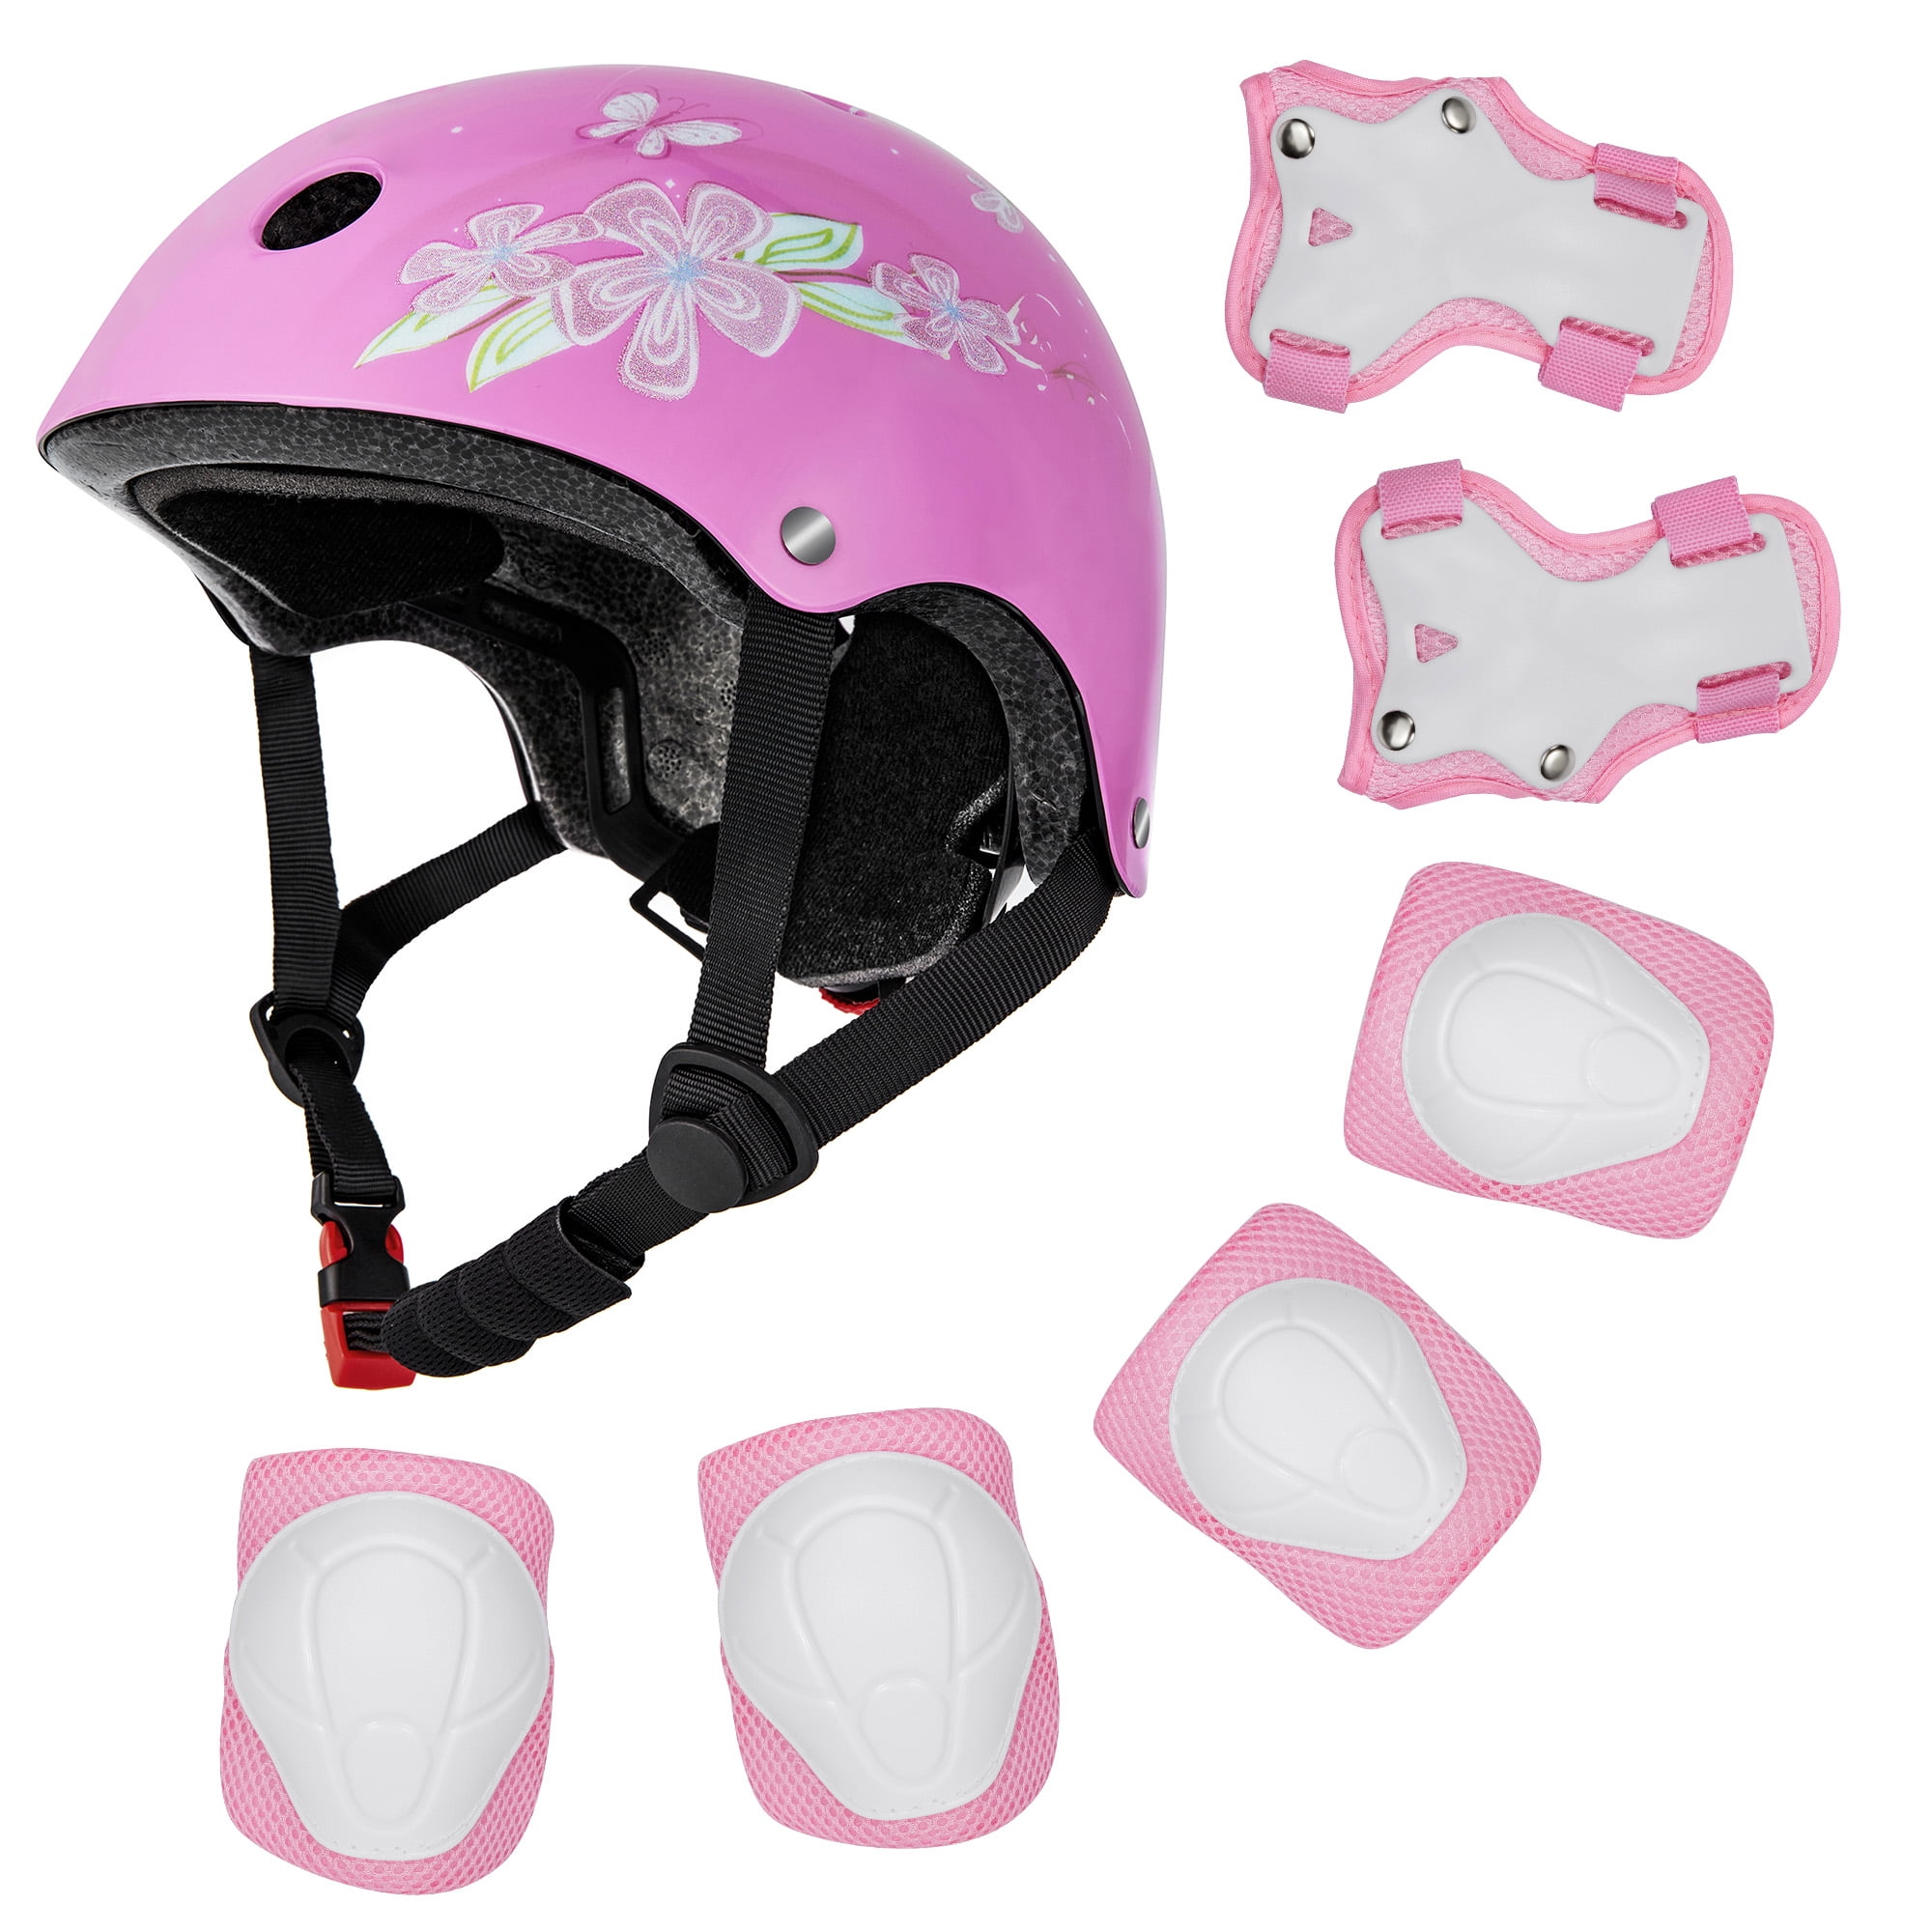 Kids Protective Gear Outfit Adjustable Helmet//Knee Wrist Guard//Elbow Pad Set USA